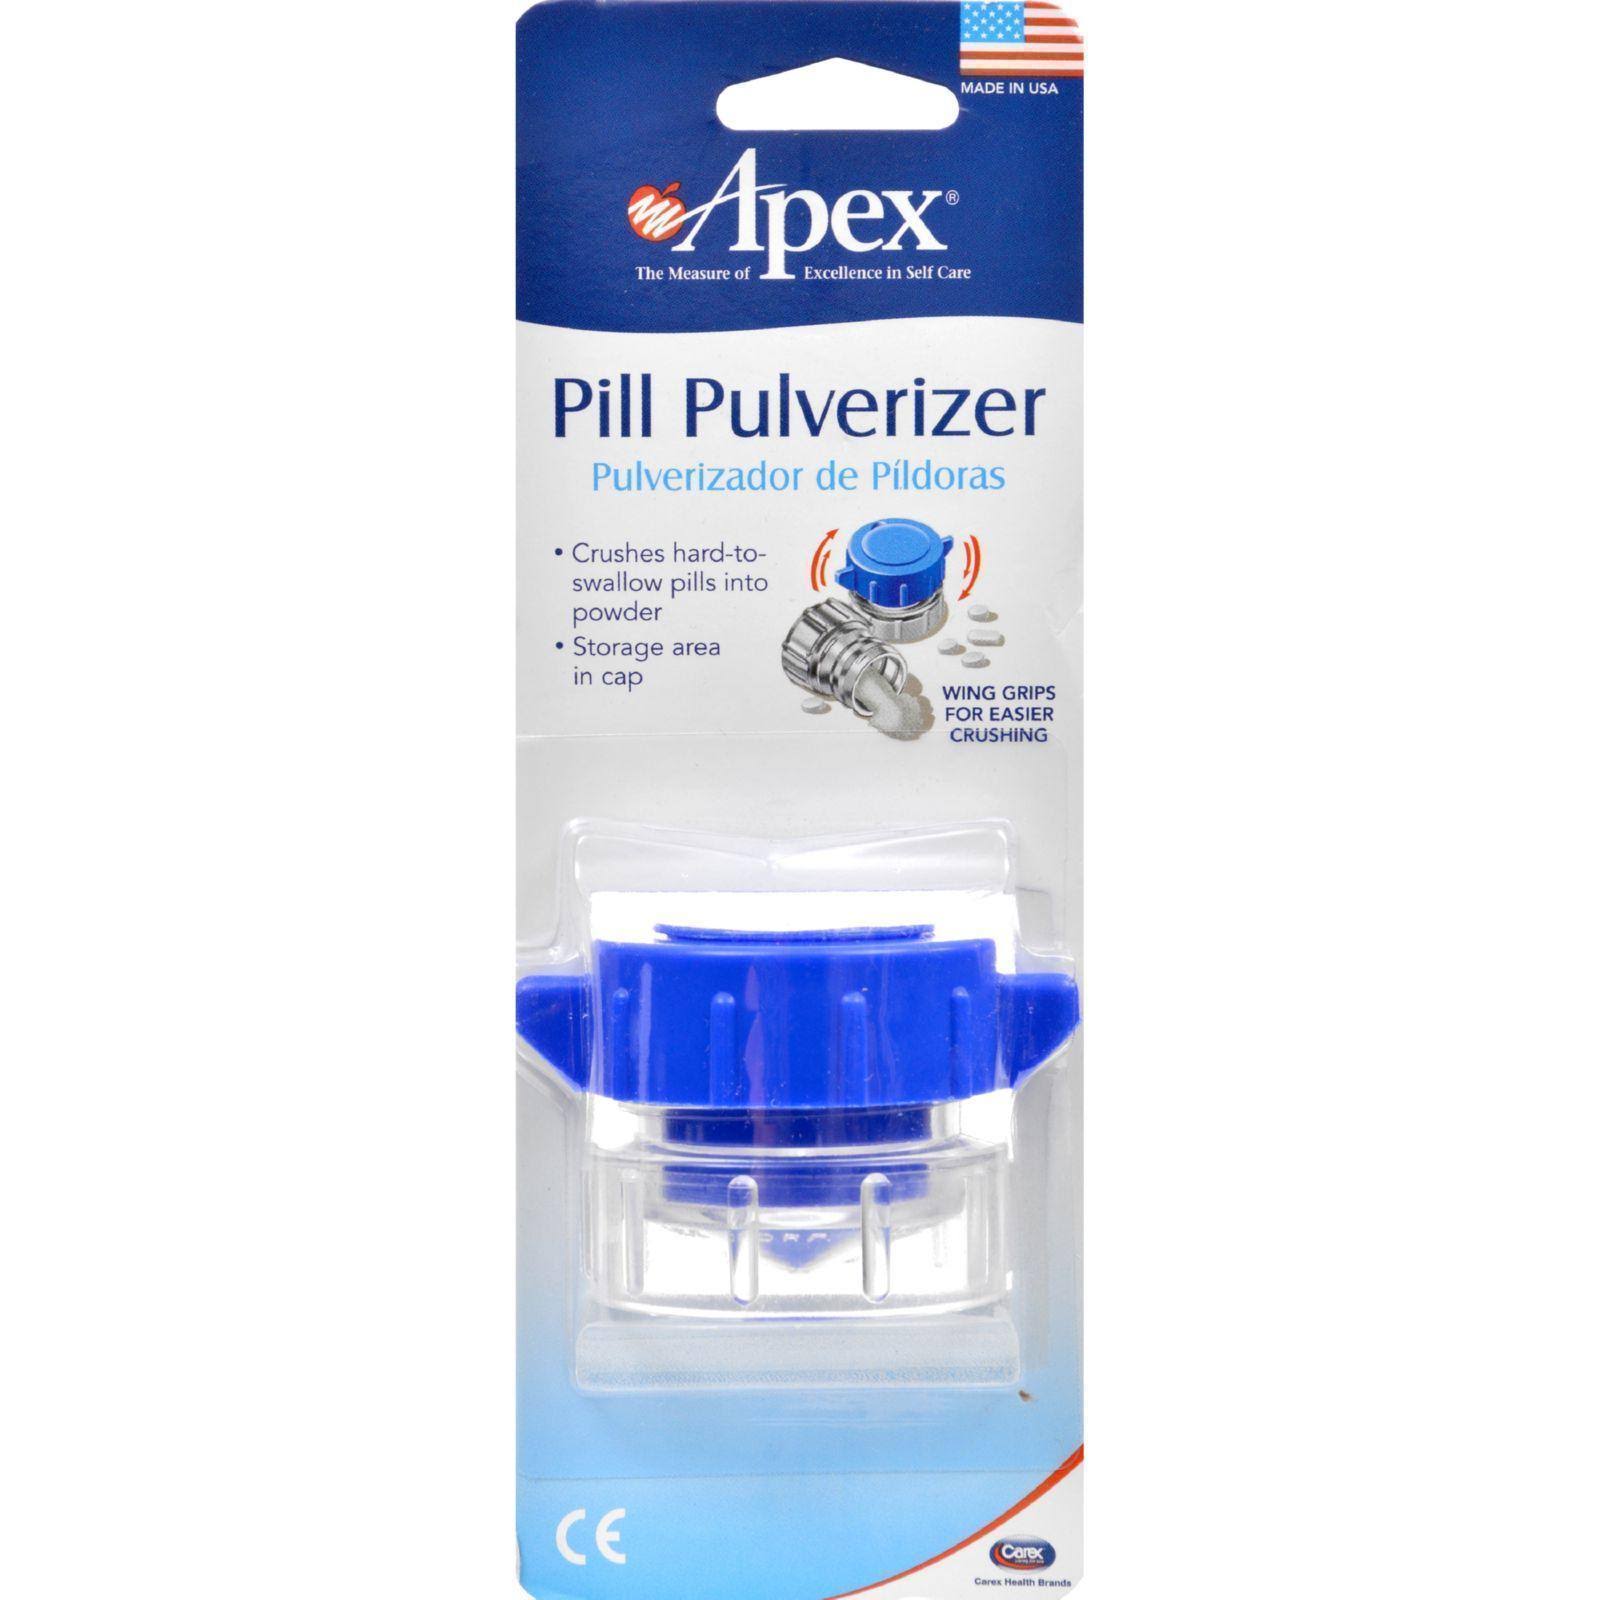 Apex Pill Pulverizer